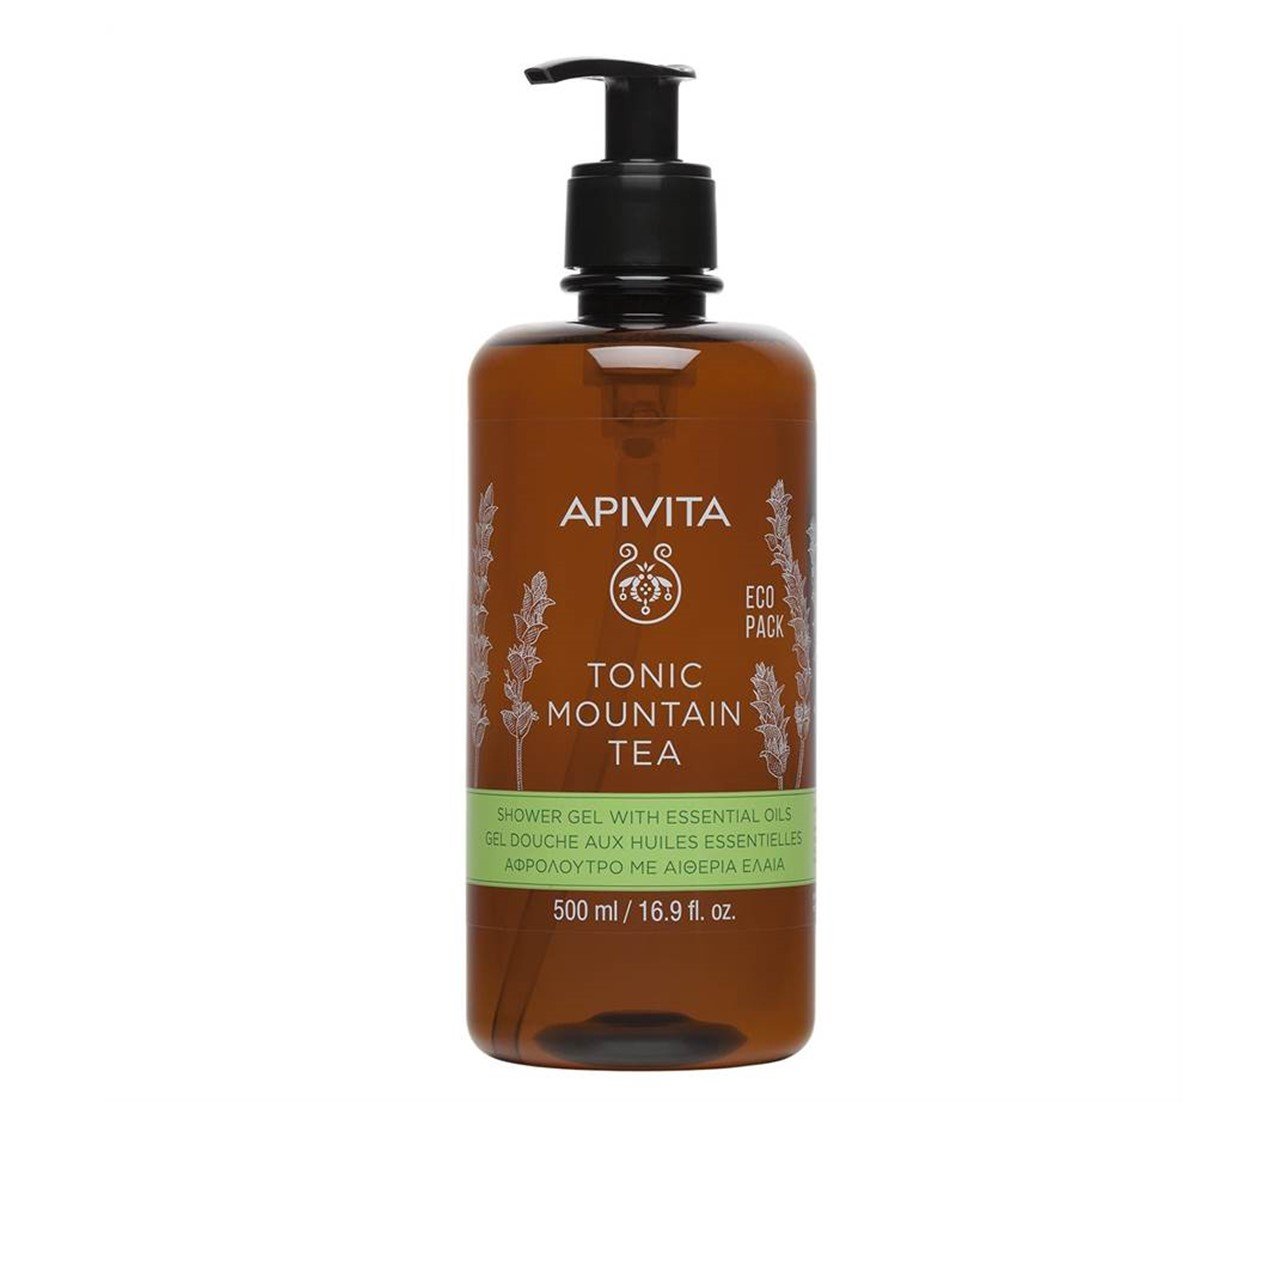 APIVITA Tonic Mountain Tea Shower Gel Essential Oils 500ml (16.91floz)